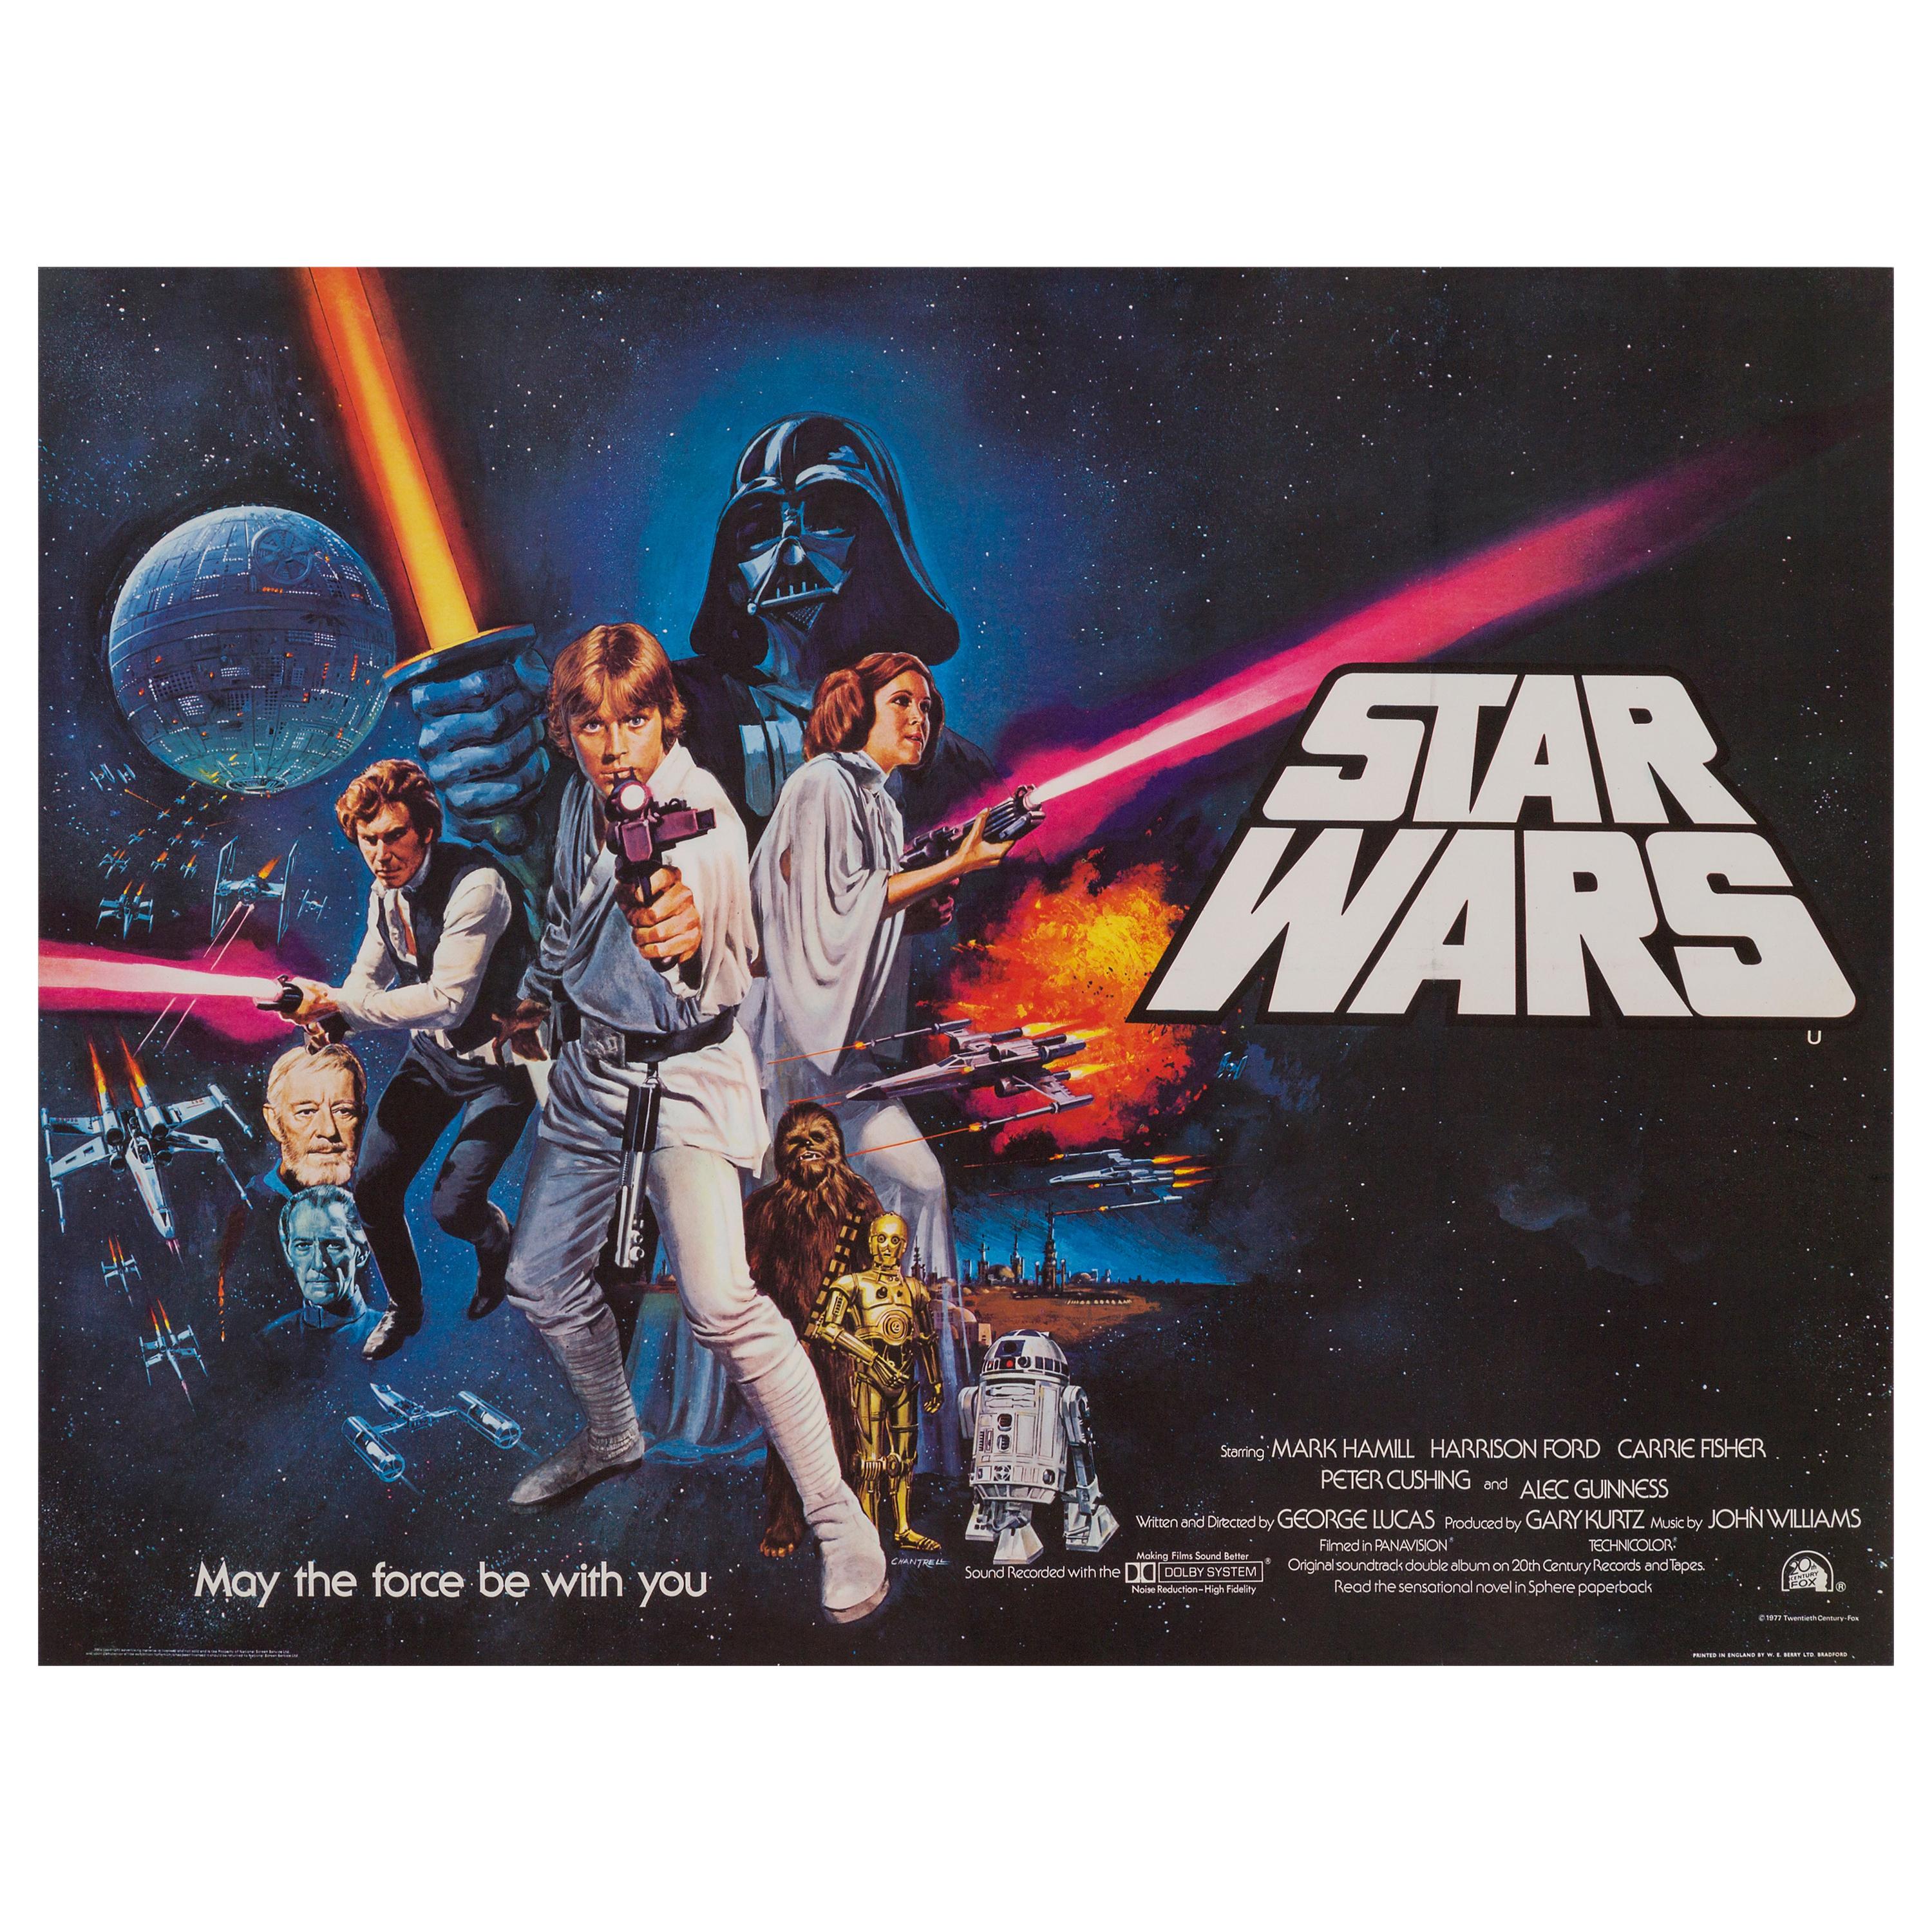 'Star Wars' Original Vintage British Quad Movie Poster by Tom Chantrell, 1977